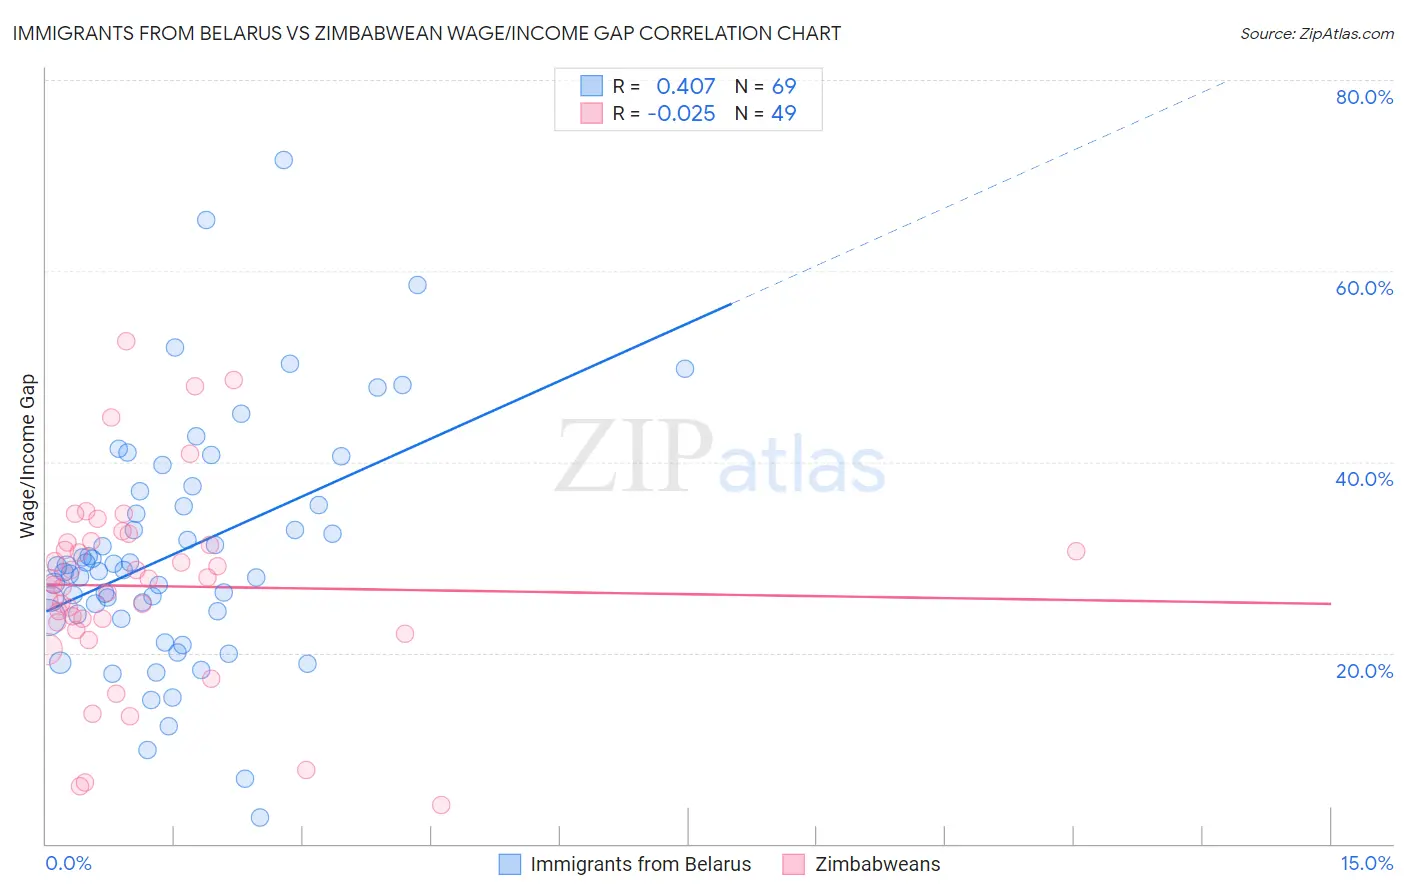 Immigrants from Belarus vs Zimbabwean Wage/Income Gap